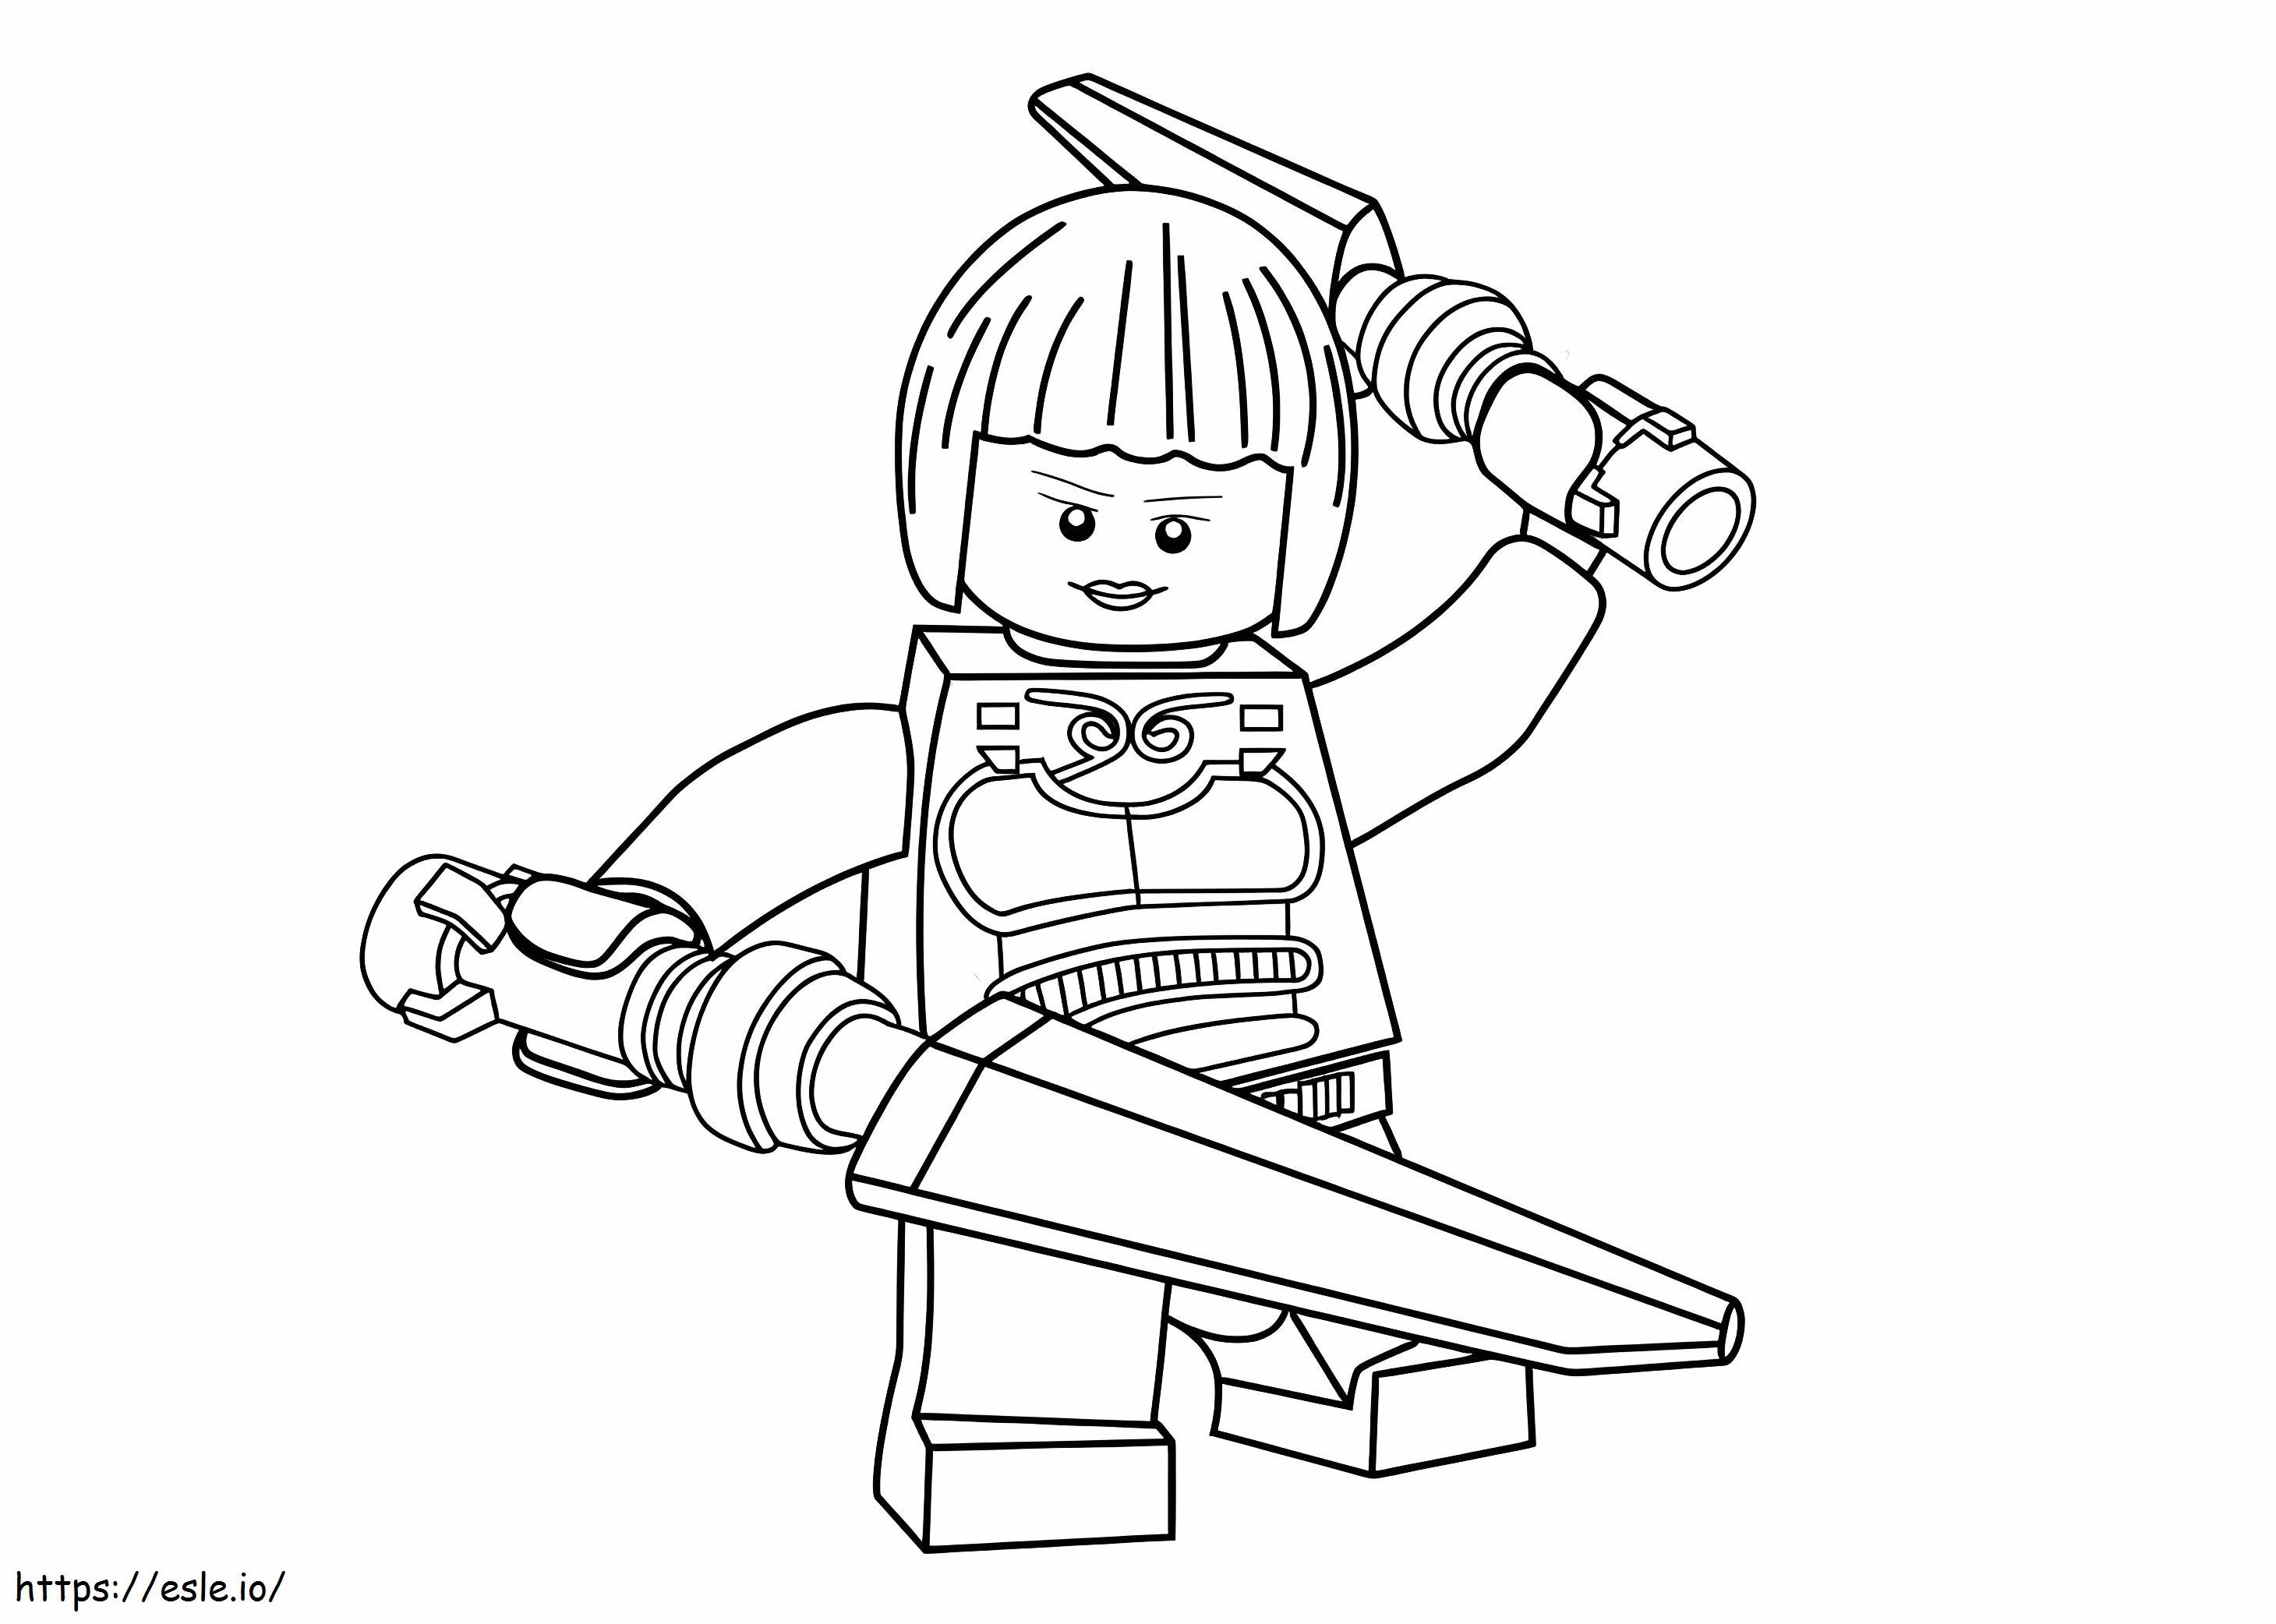 Lego Ninja Boy coloring page